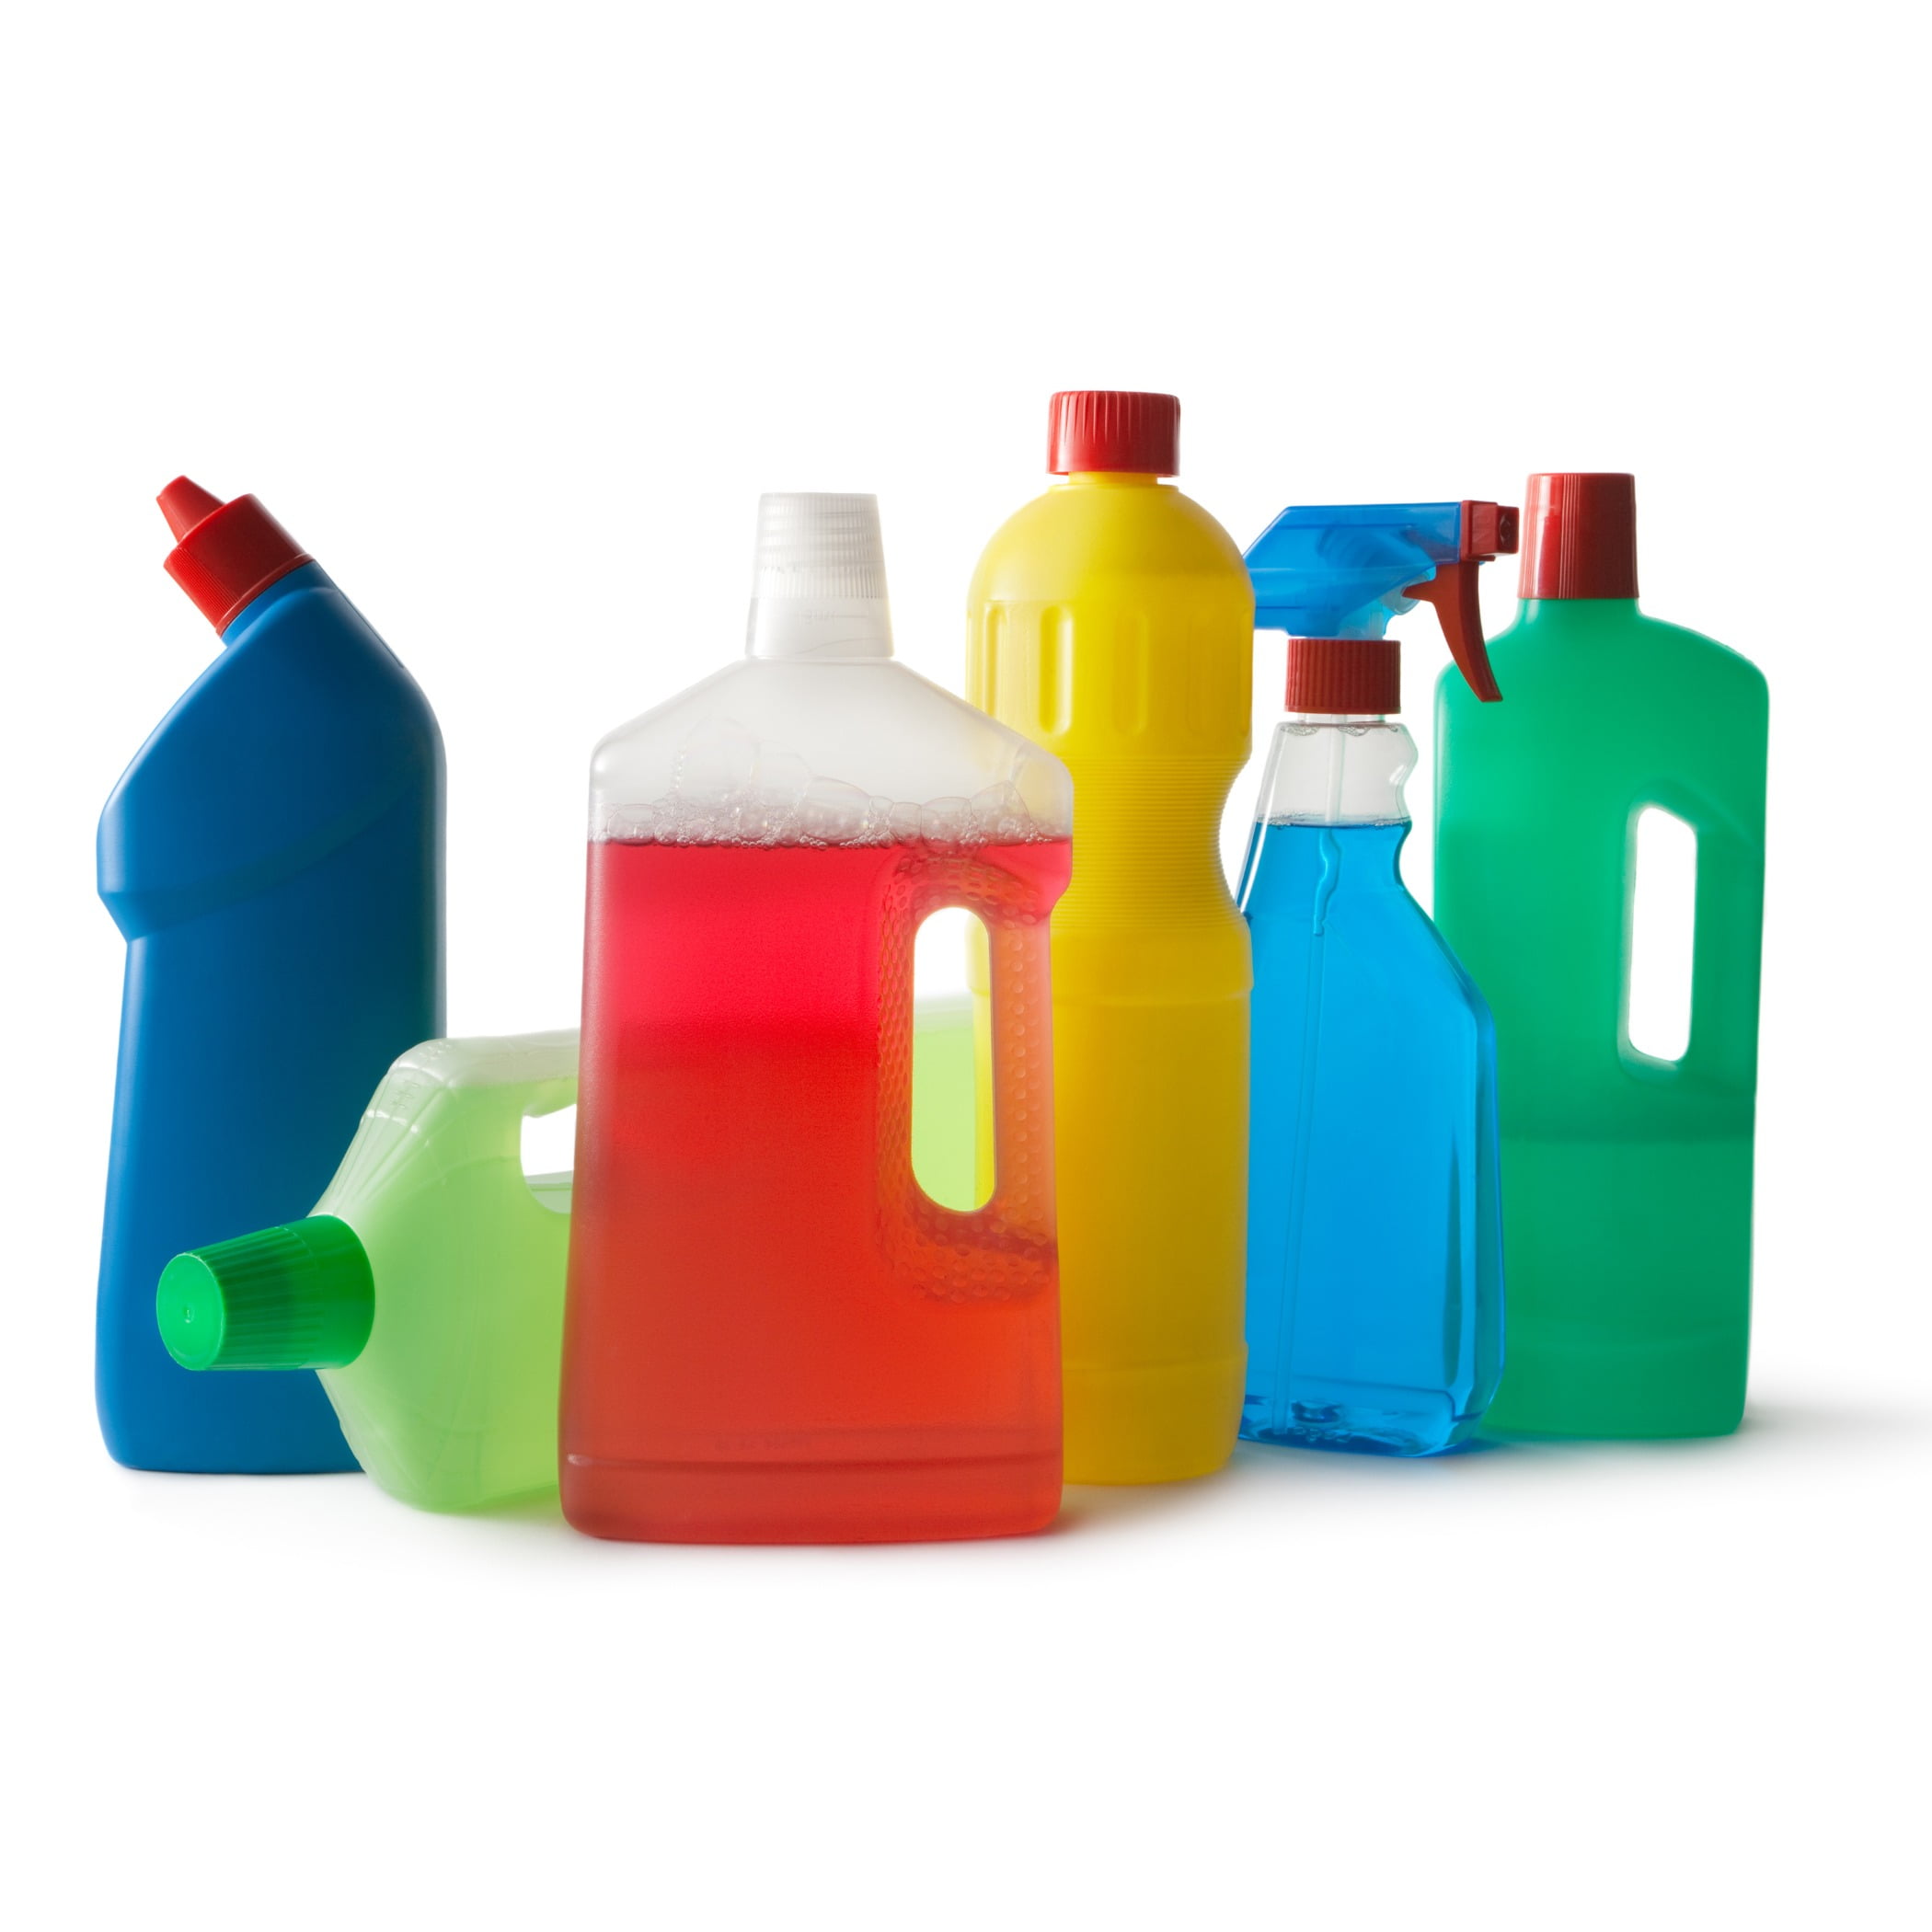 Plastic bottle, Liquid, Product, Toy, Drinkware